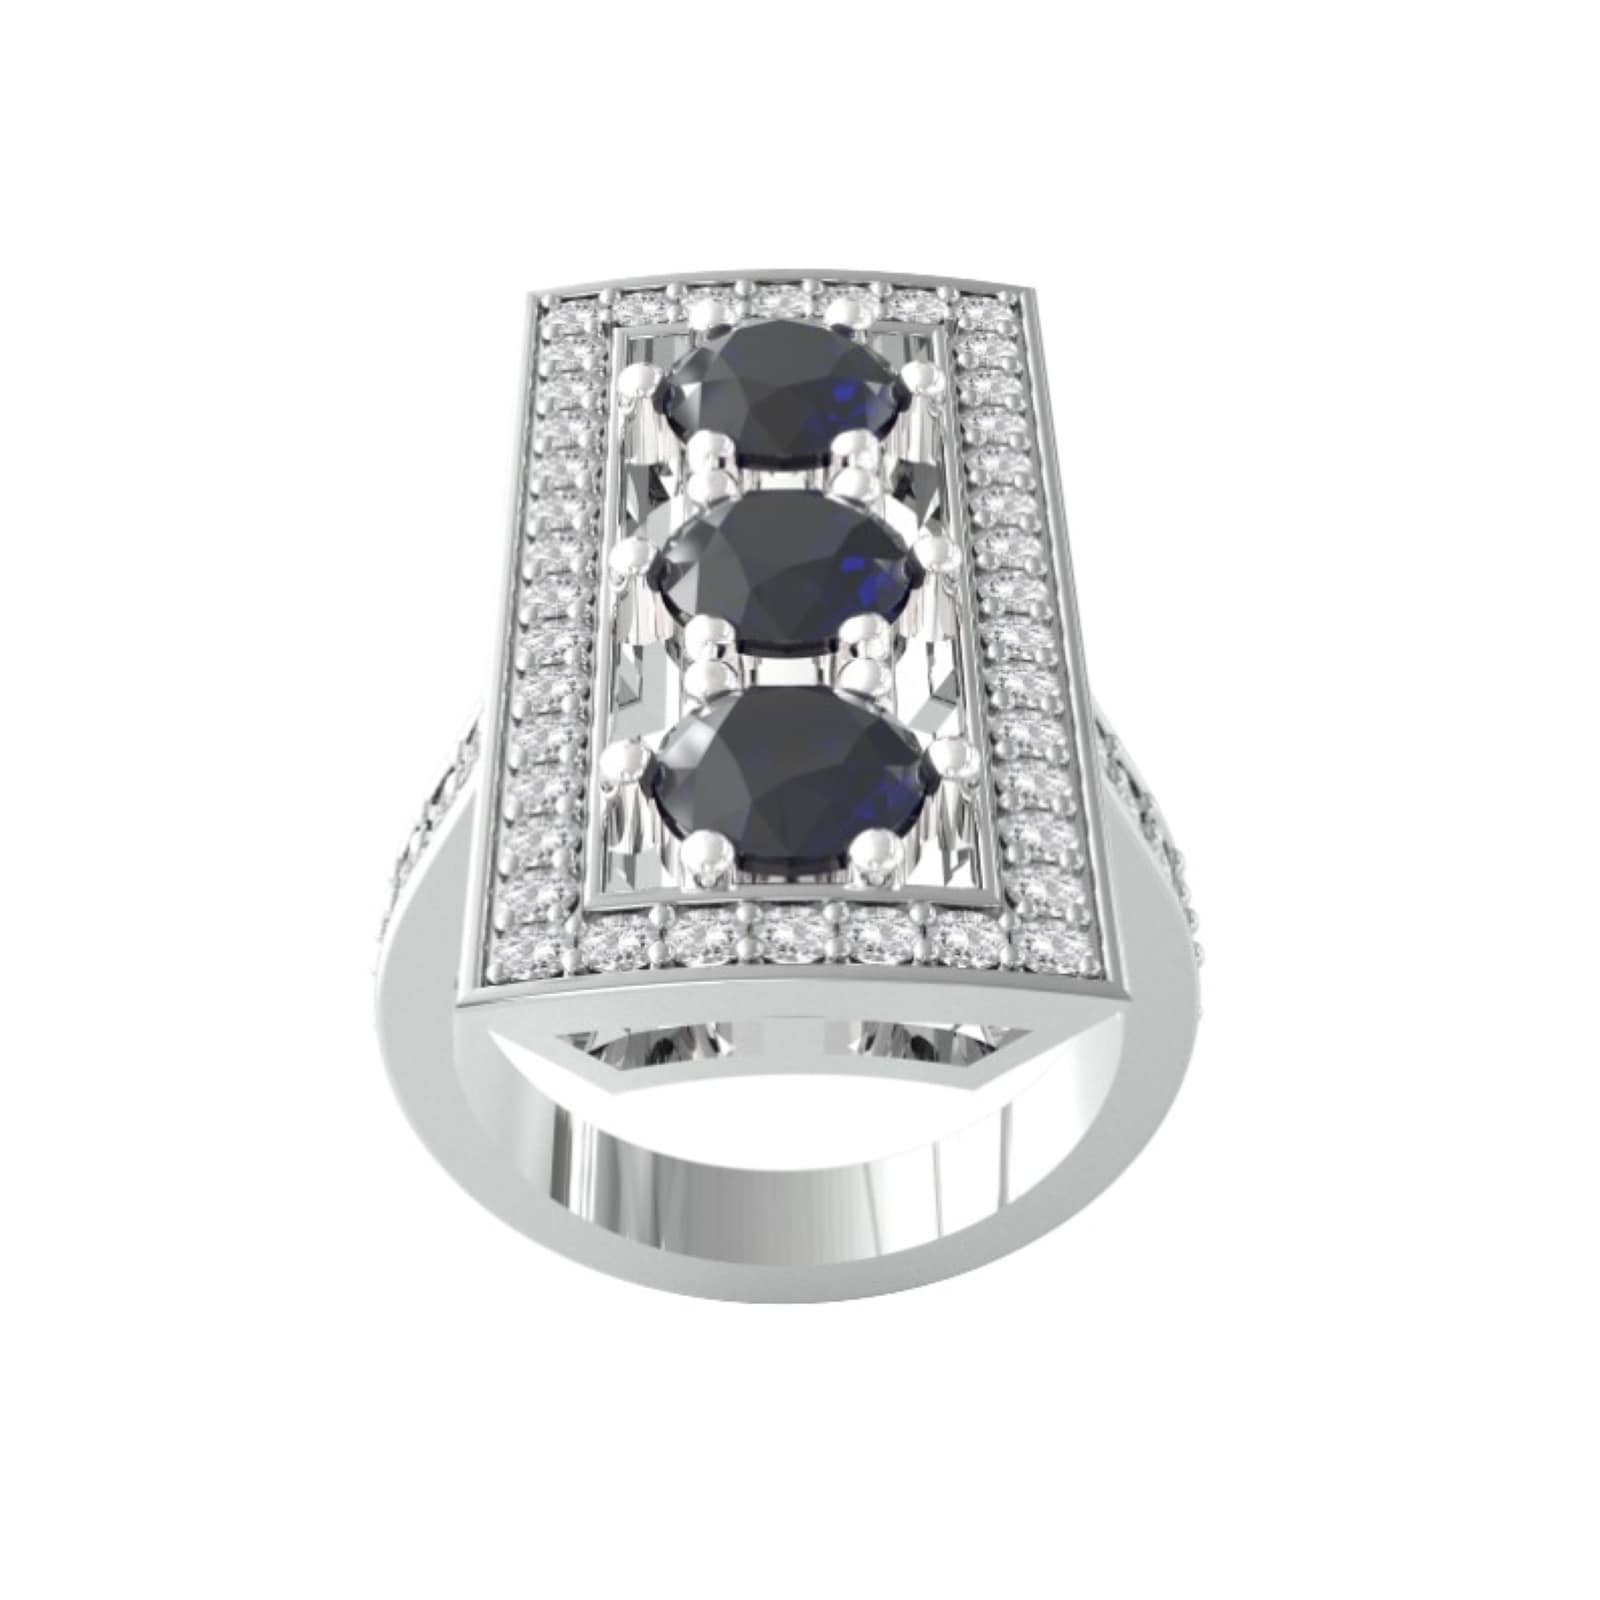 18ct White Gold Art Deco Sapphire & Diamond Plaque Ring - Ring Size L.5